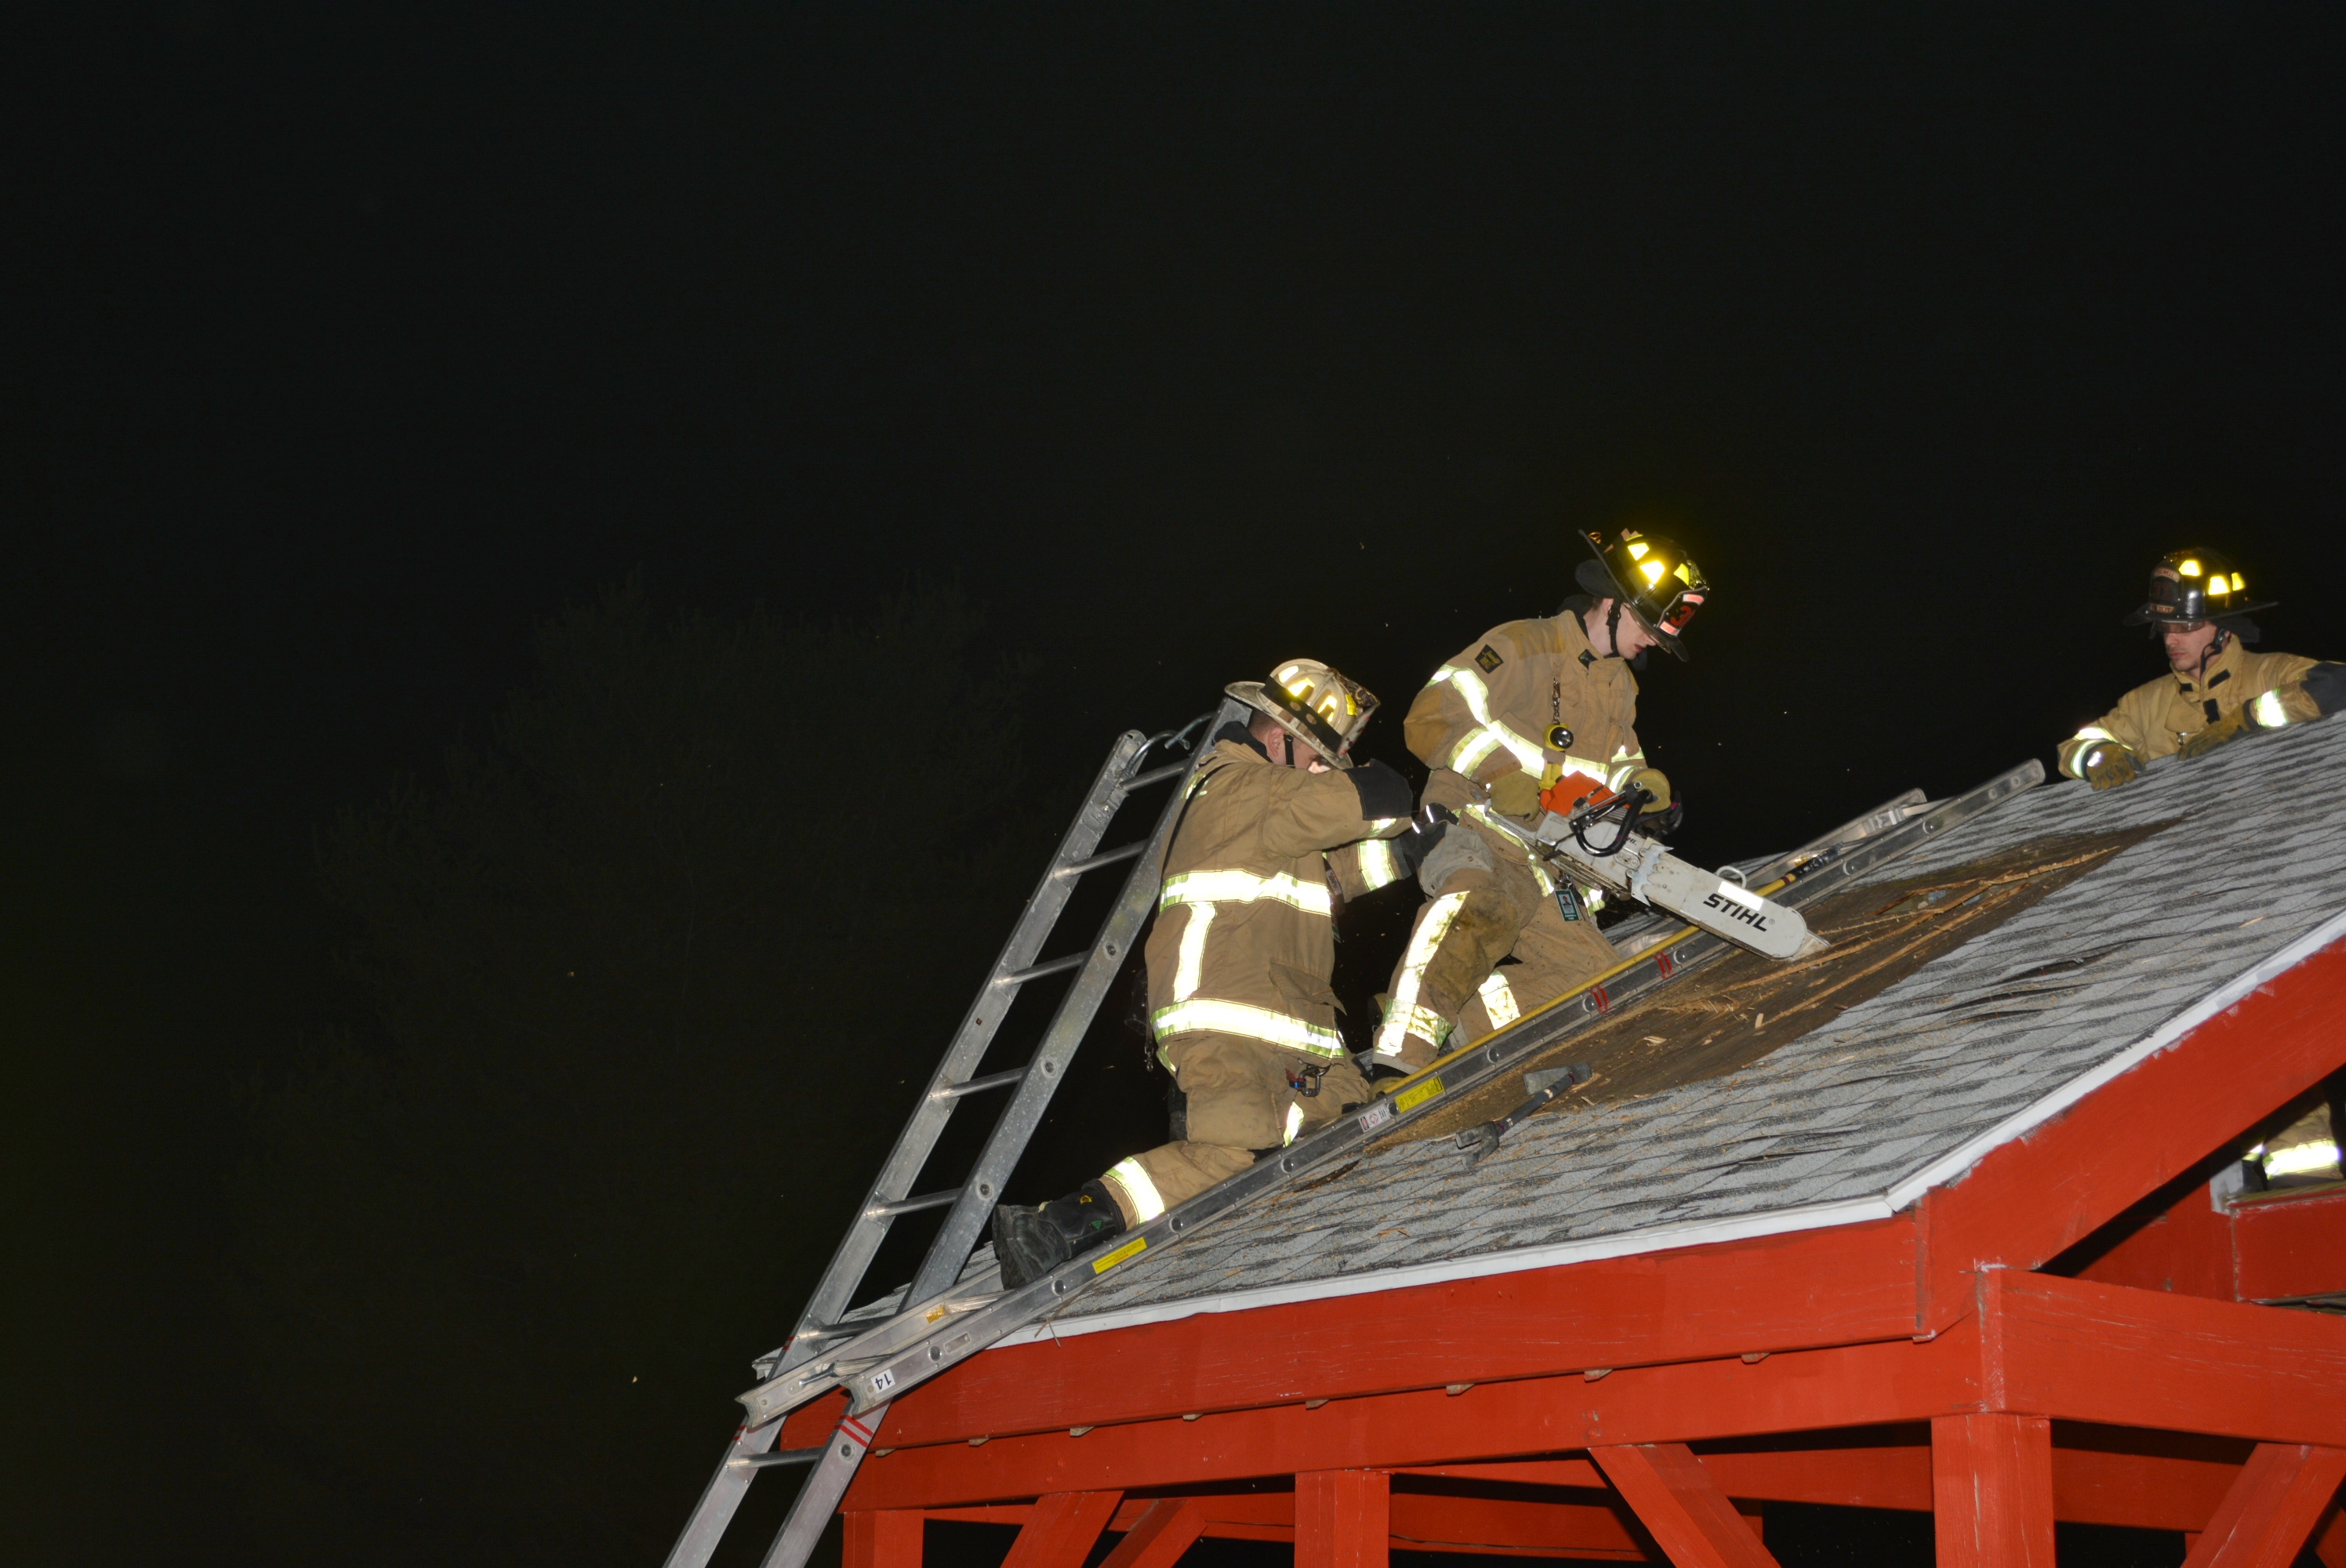 03-06-17  Training - Roof Ventilation Vestal